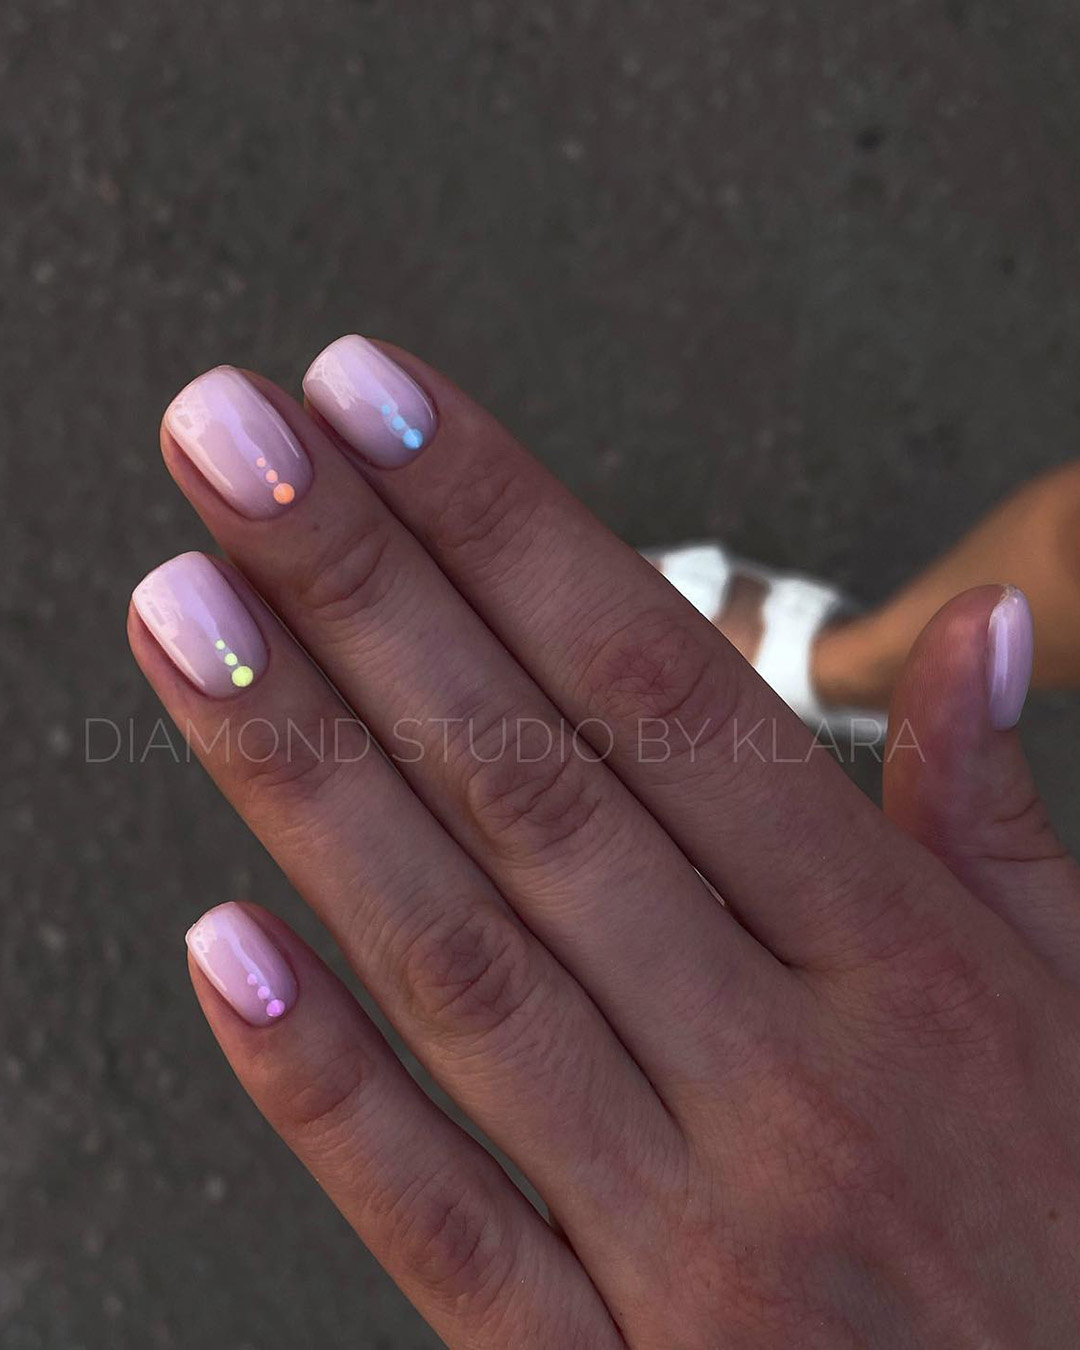 simple wedding nails short pink with glitter dots diamond_studio_by_klara